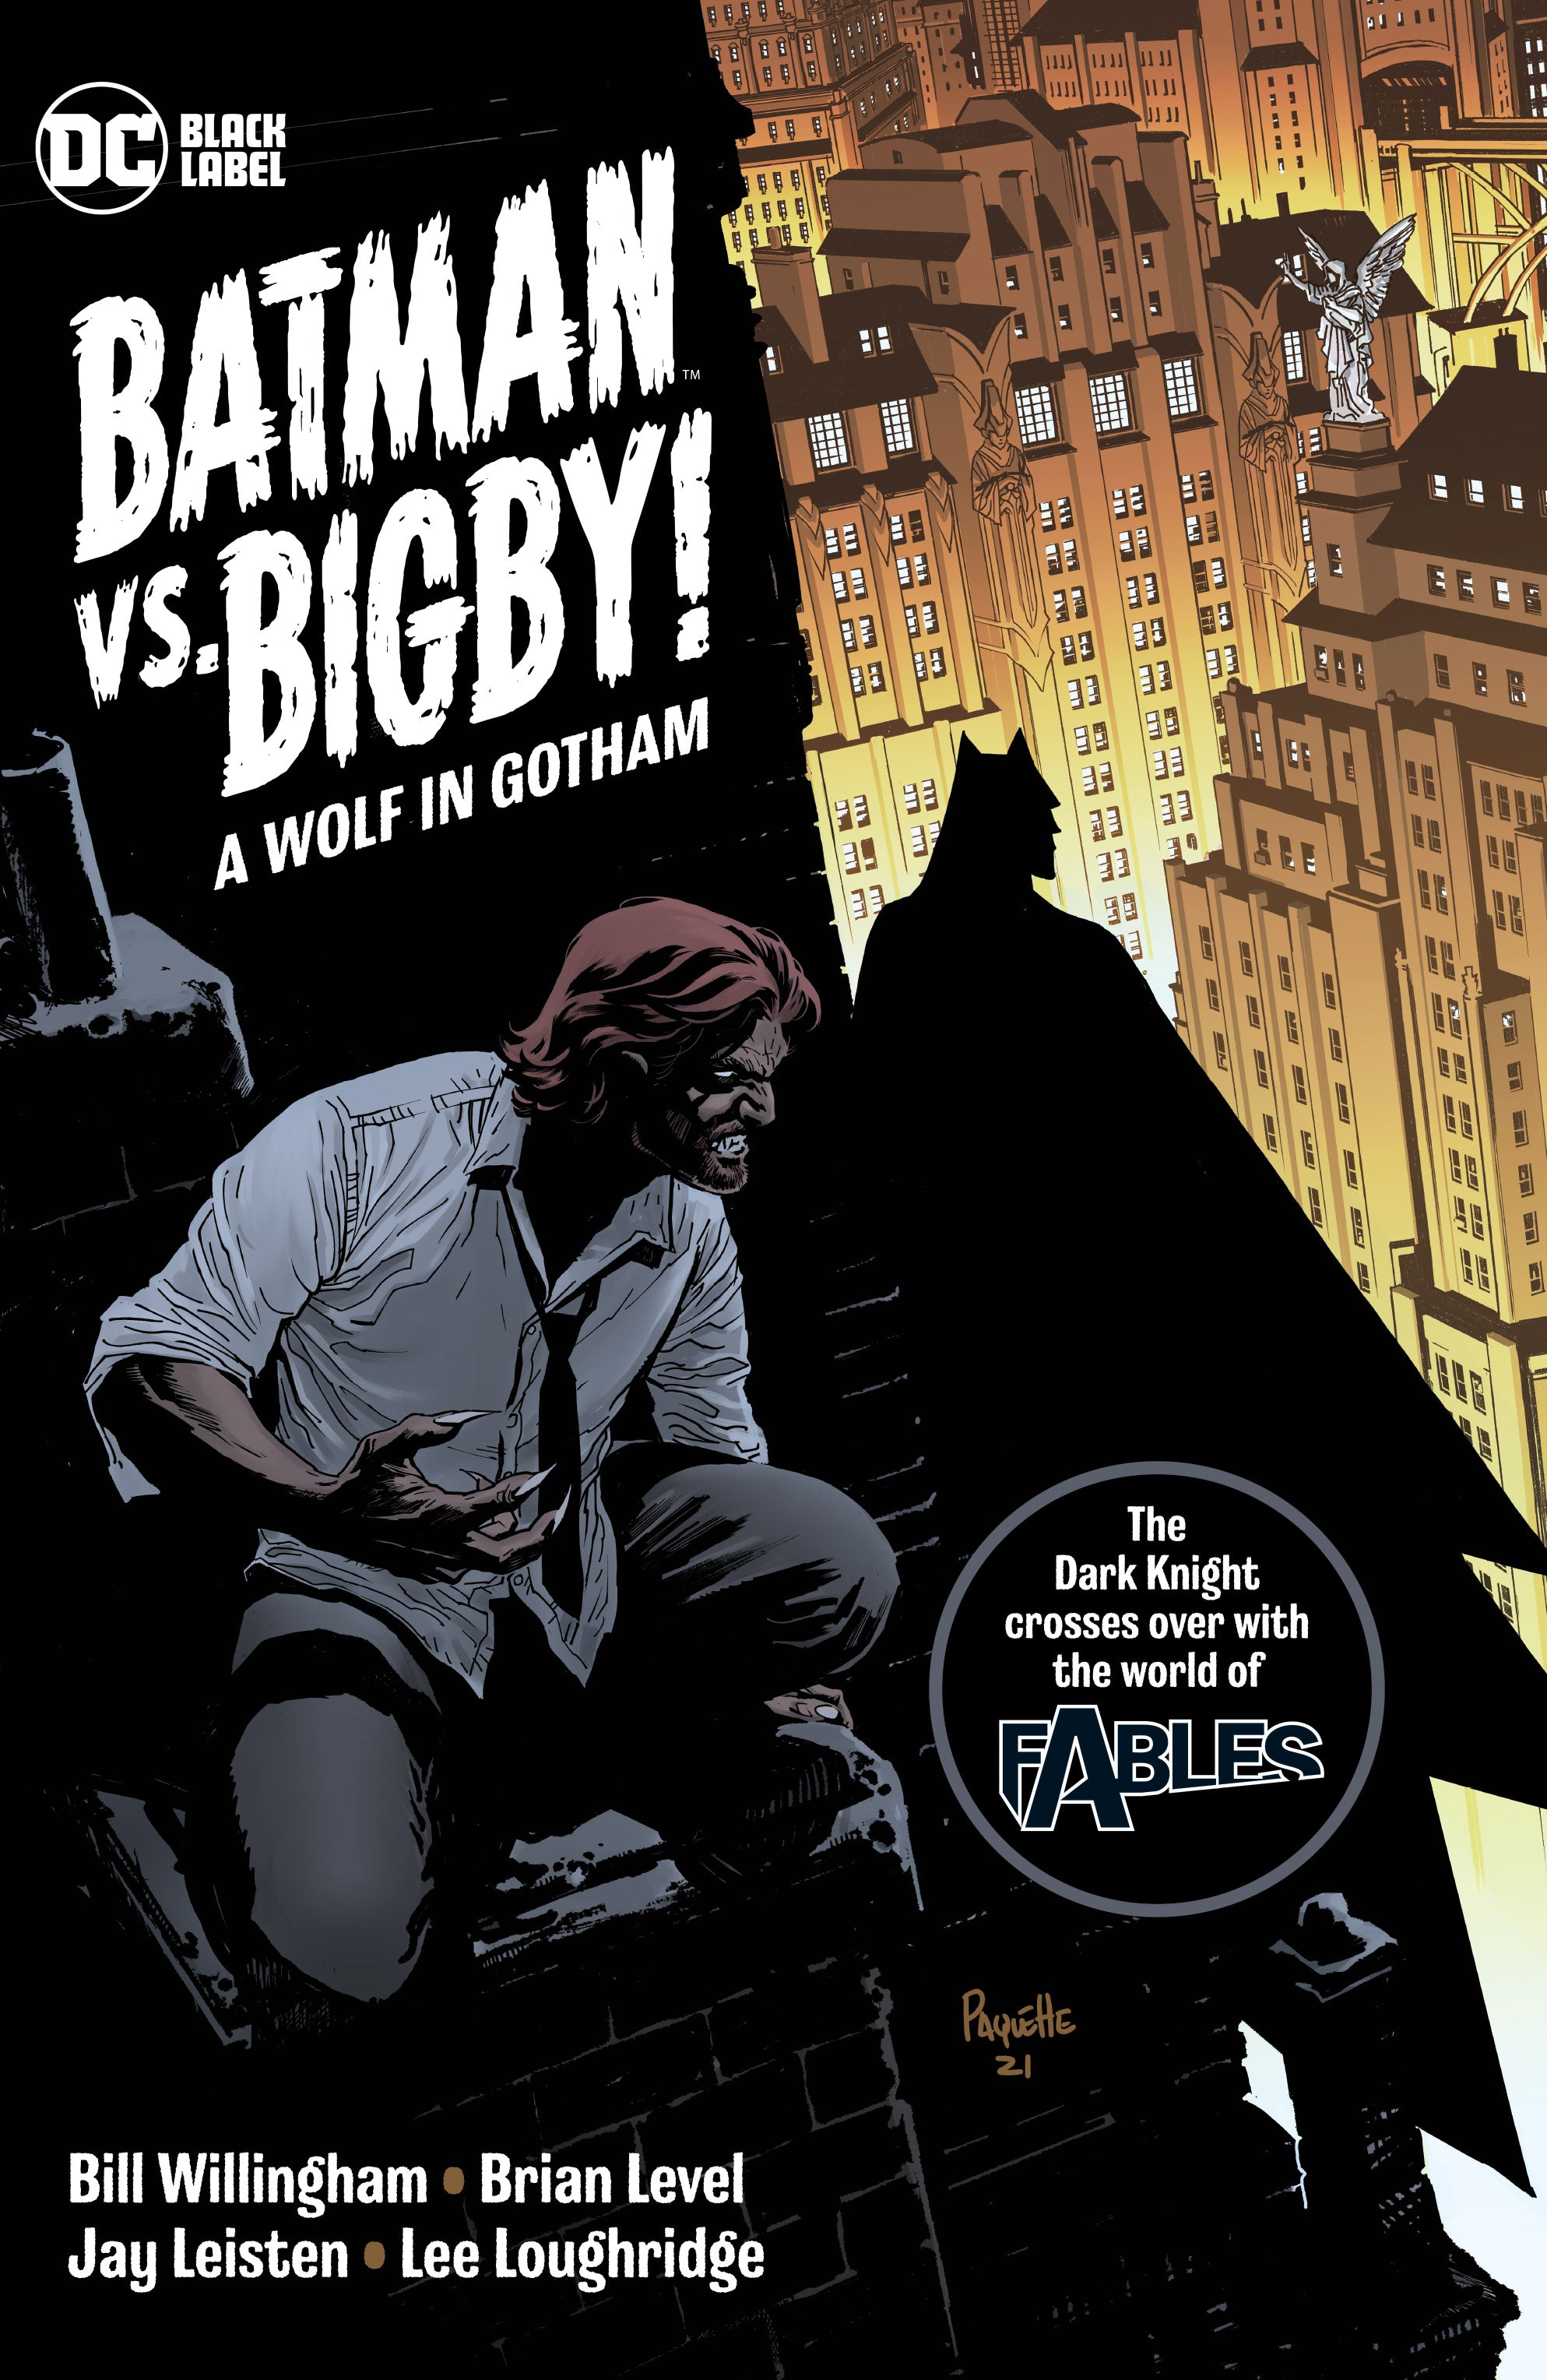 BATMAN VS BIGBY A WOLF IN GOTHAM TRADE PAPERBACK